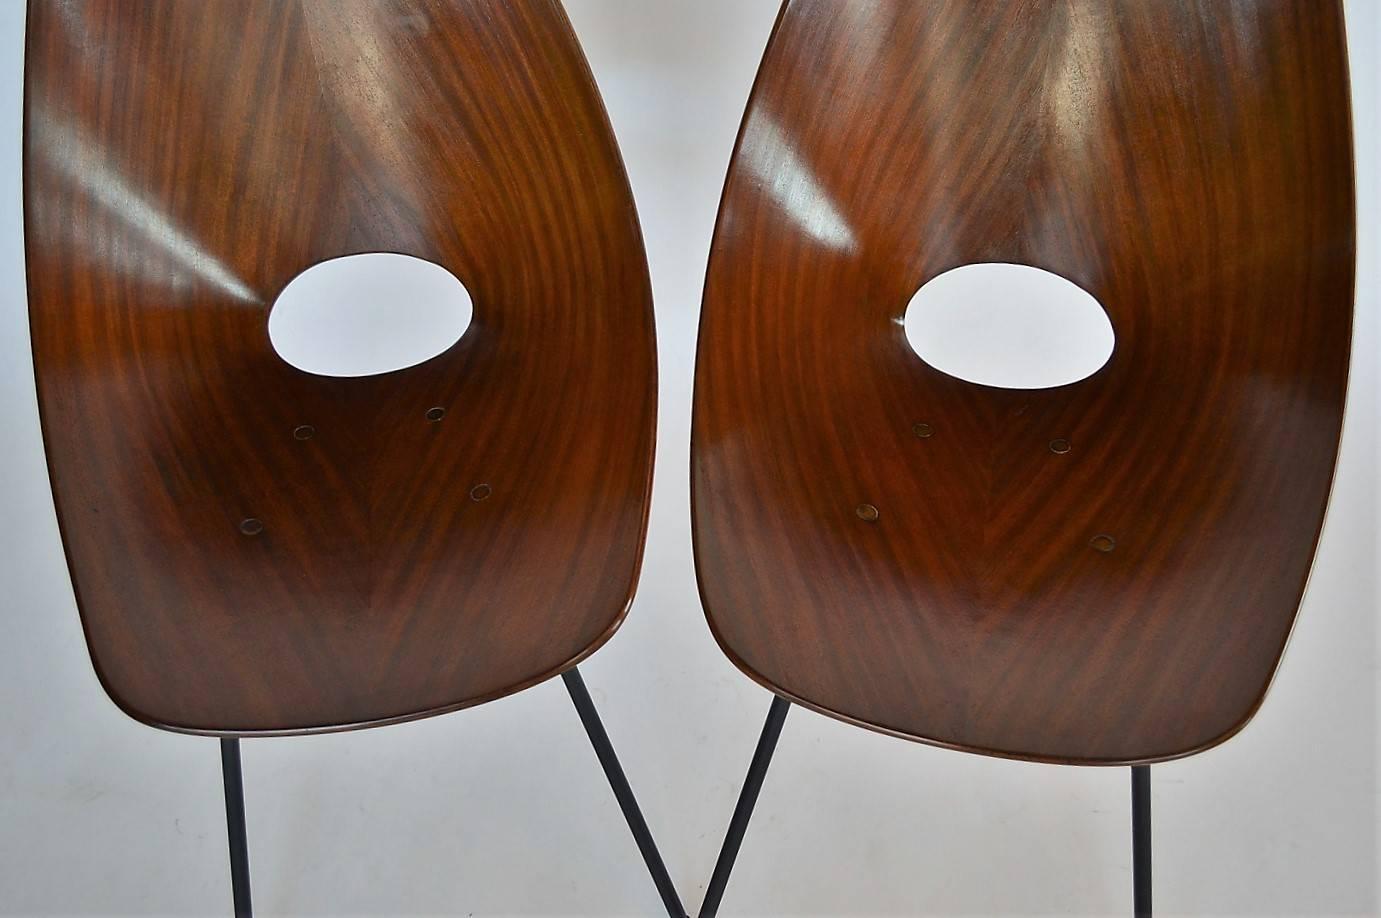 Metal Medea Mahogany Chairs by Vittorio Nobili, Fratelli Tagliabue, Italy, 1955